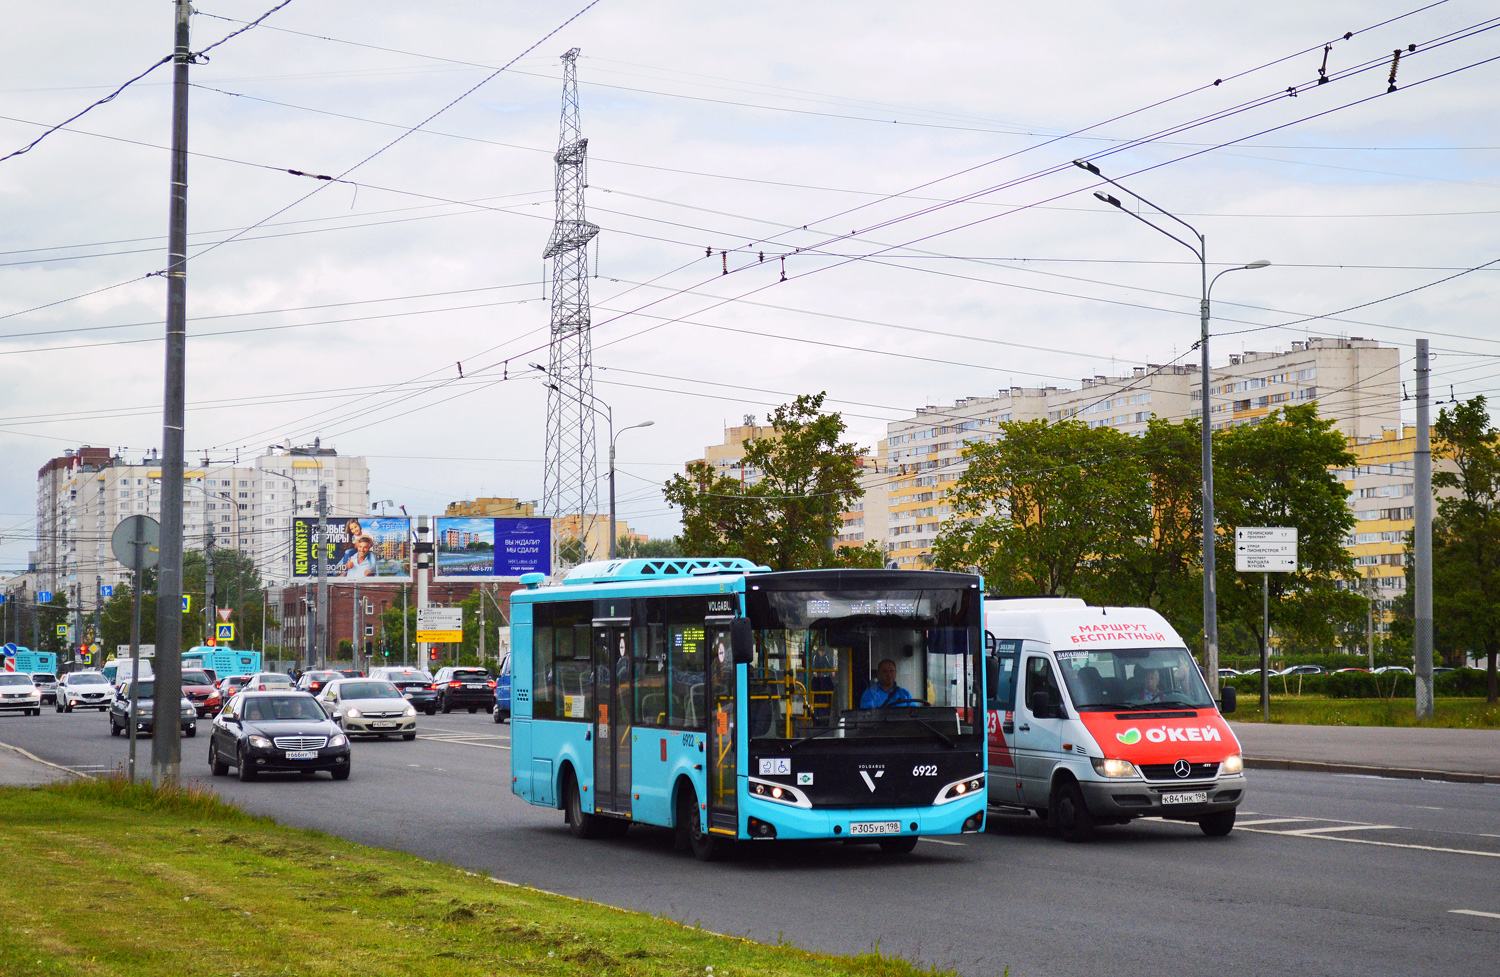 Saint Petersburg, Volgabus-4298.G4 (LNG) # 6922